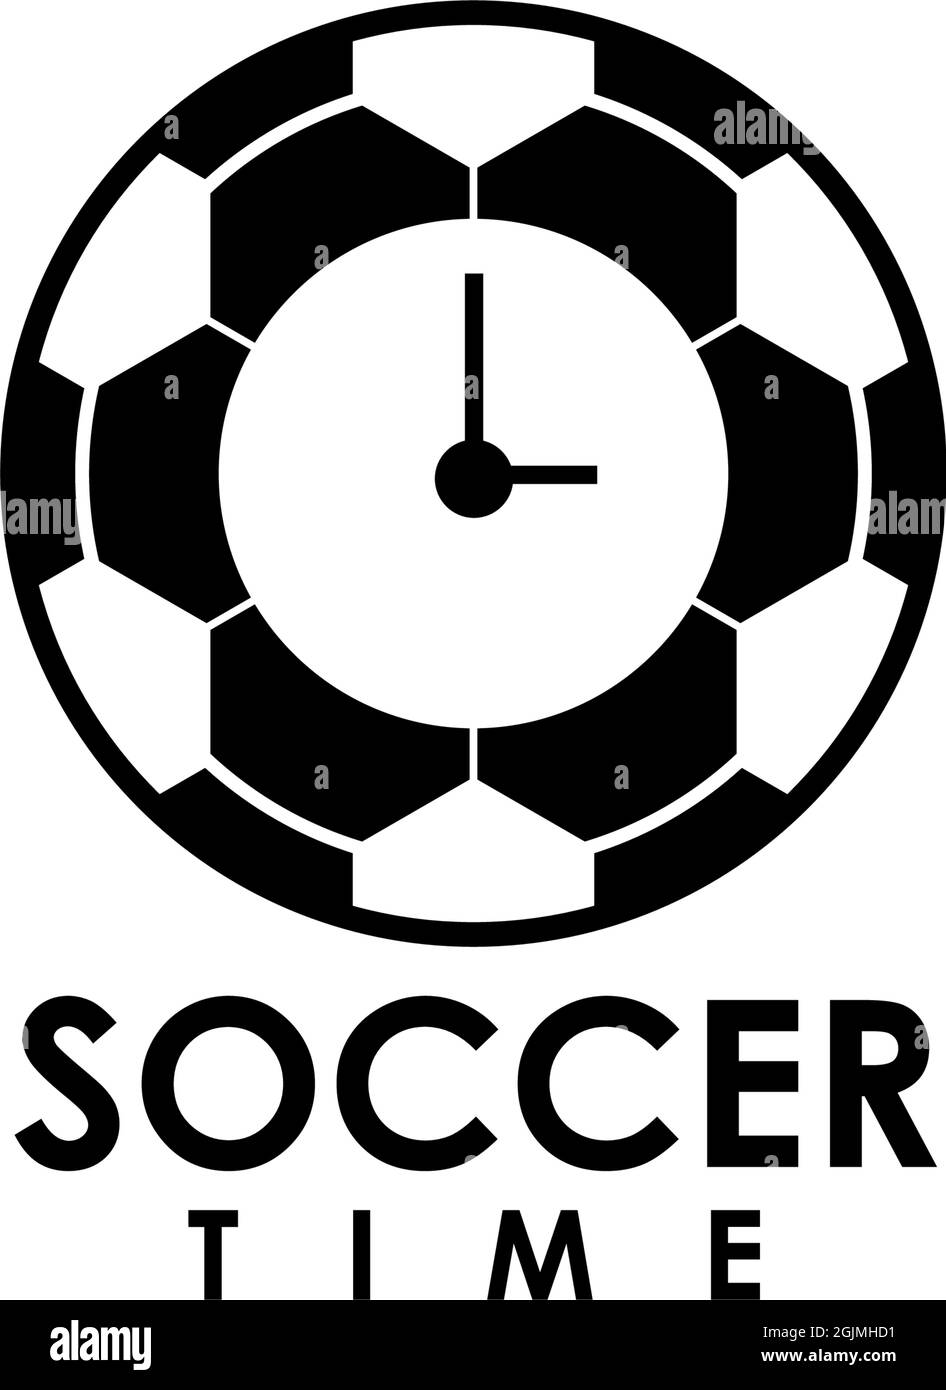 Soccer time logo design vector illustration template Stock Vector